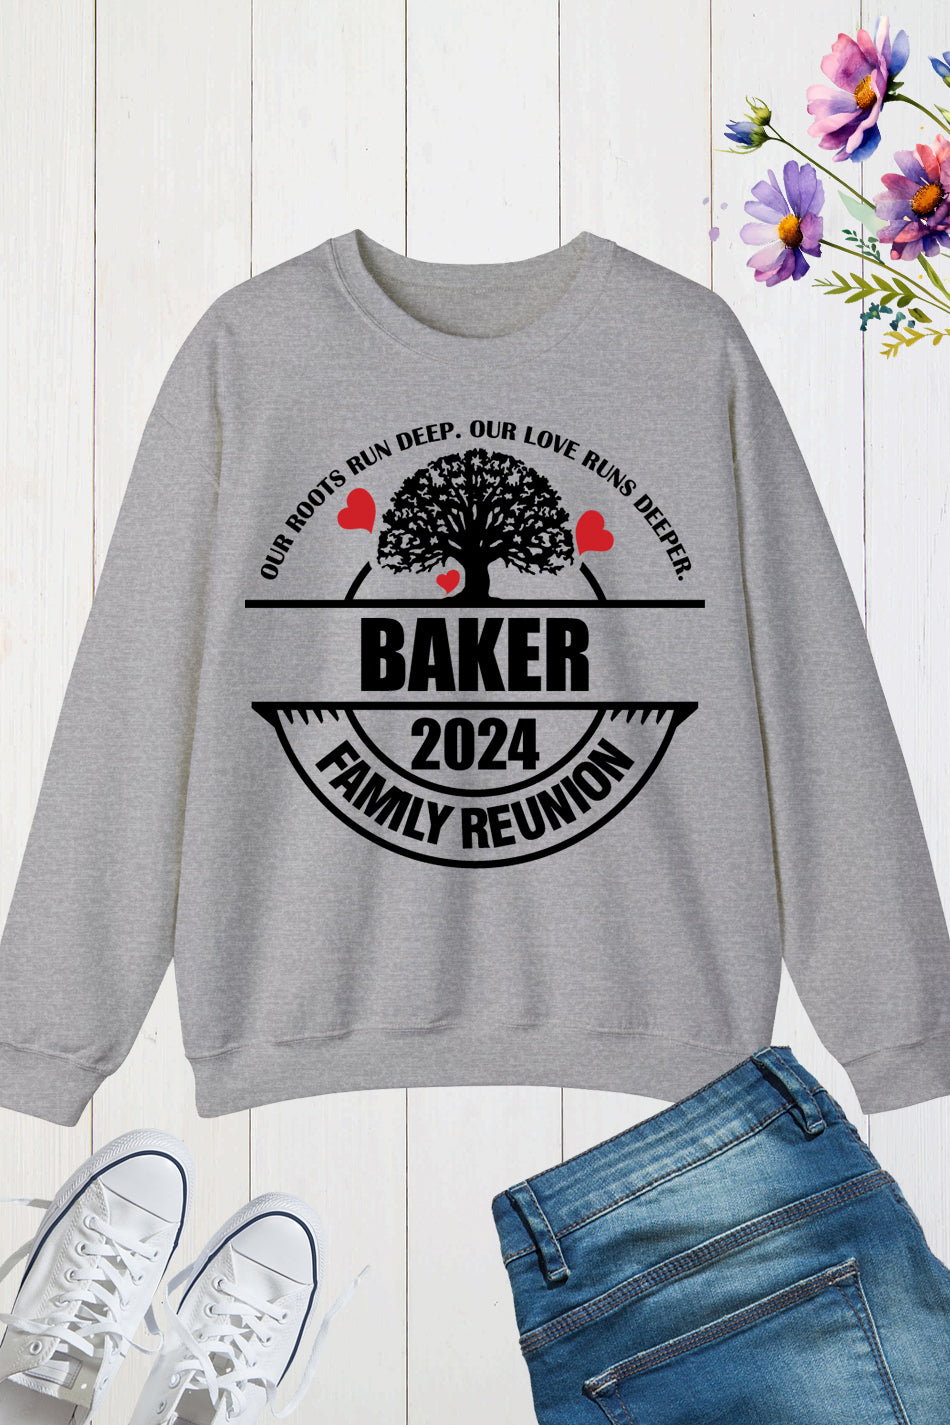 Personalized Family Reunion Sweatshirt